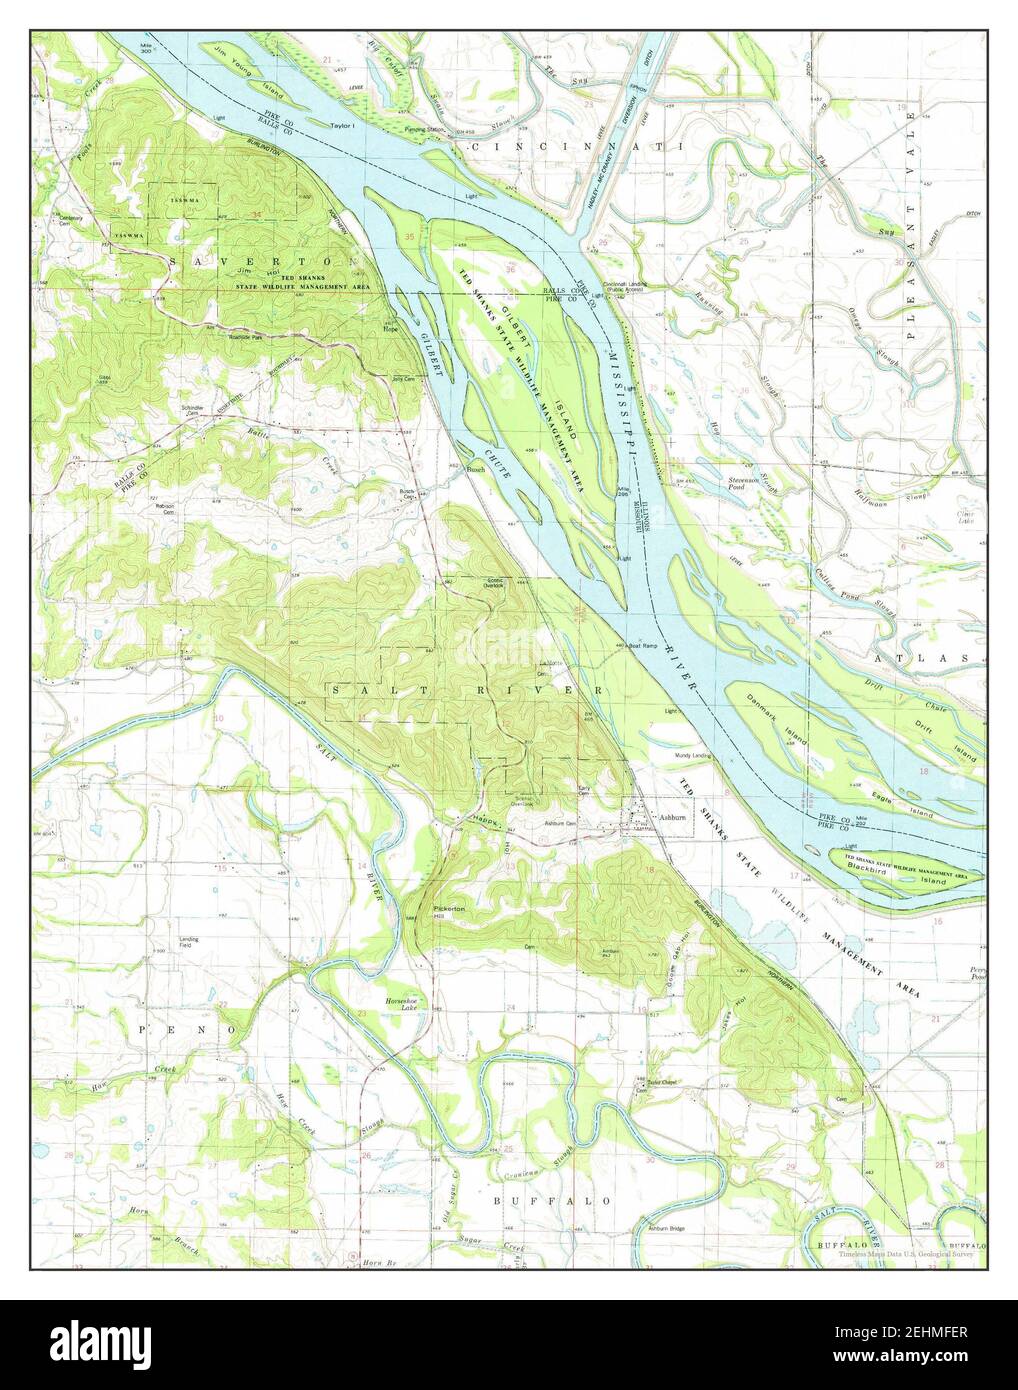 Ashburn, Missouri, map 1978, 1:24000, United States of America by Timeless Maps, data U.S. Geological Survey Stock Photo